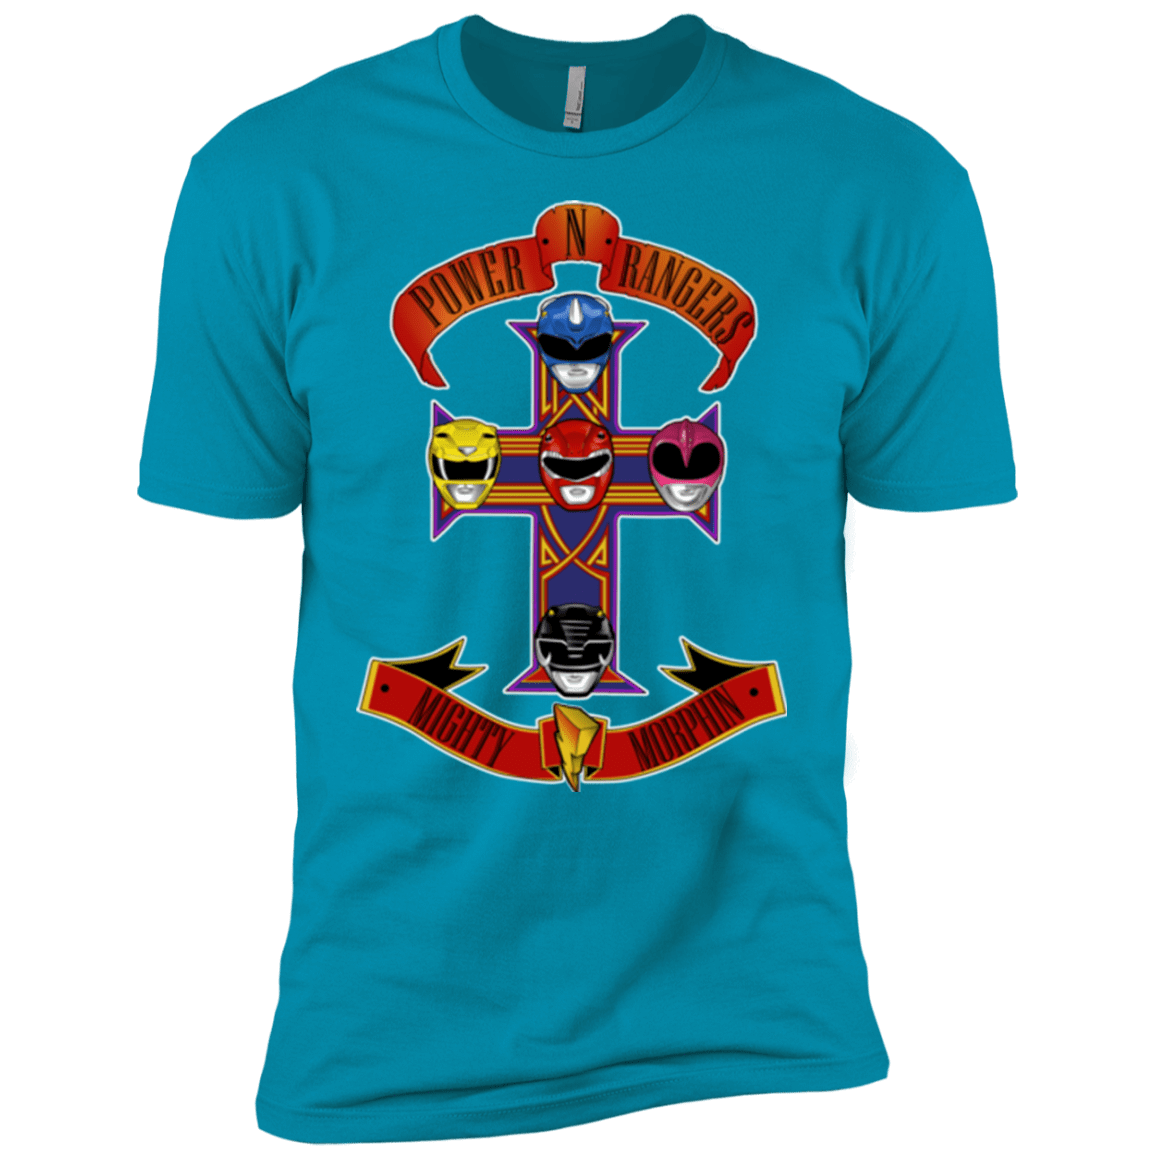 T-Shirts Turquoise / YXS Power N Rangers Boys Premium T-Shirt